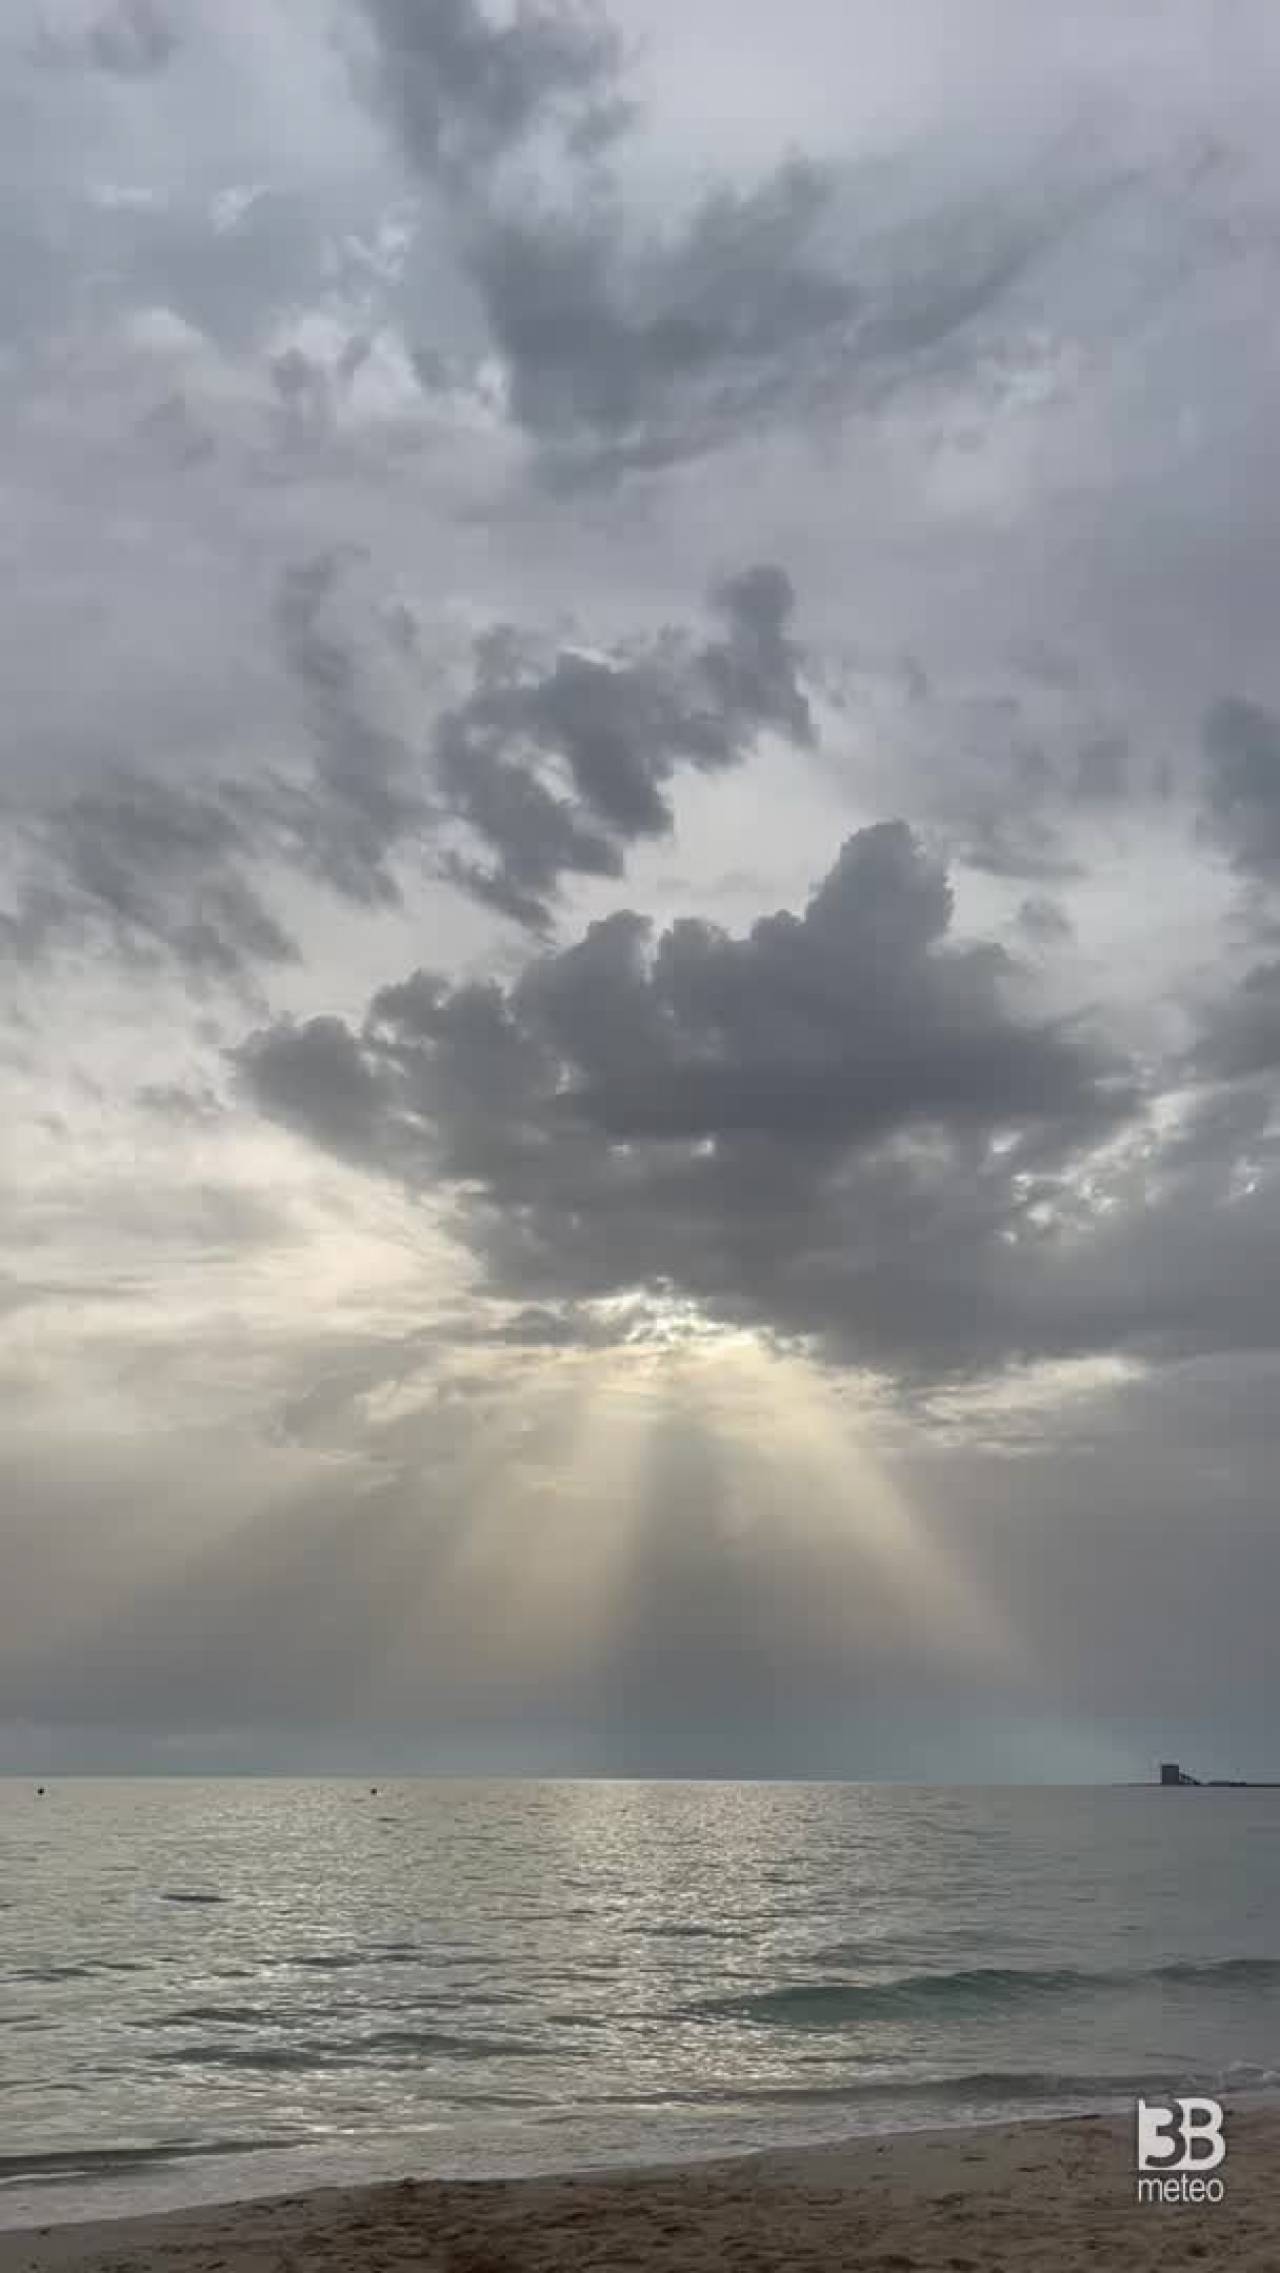 Cronaca meteo video: tramonto a Porto Cesareo